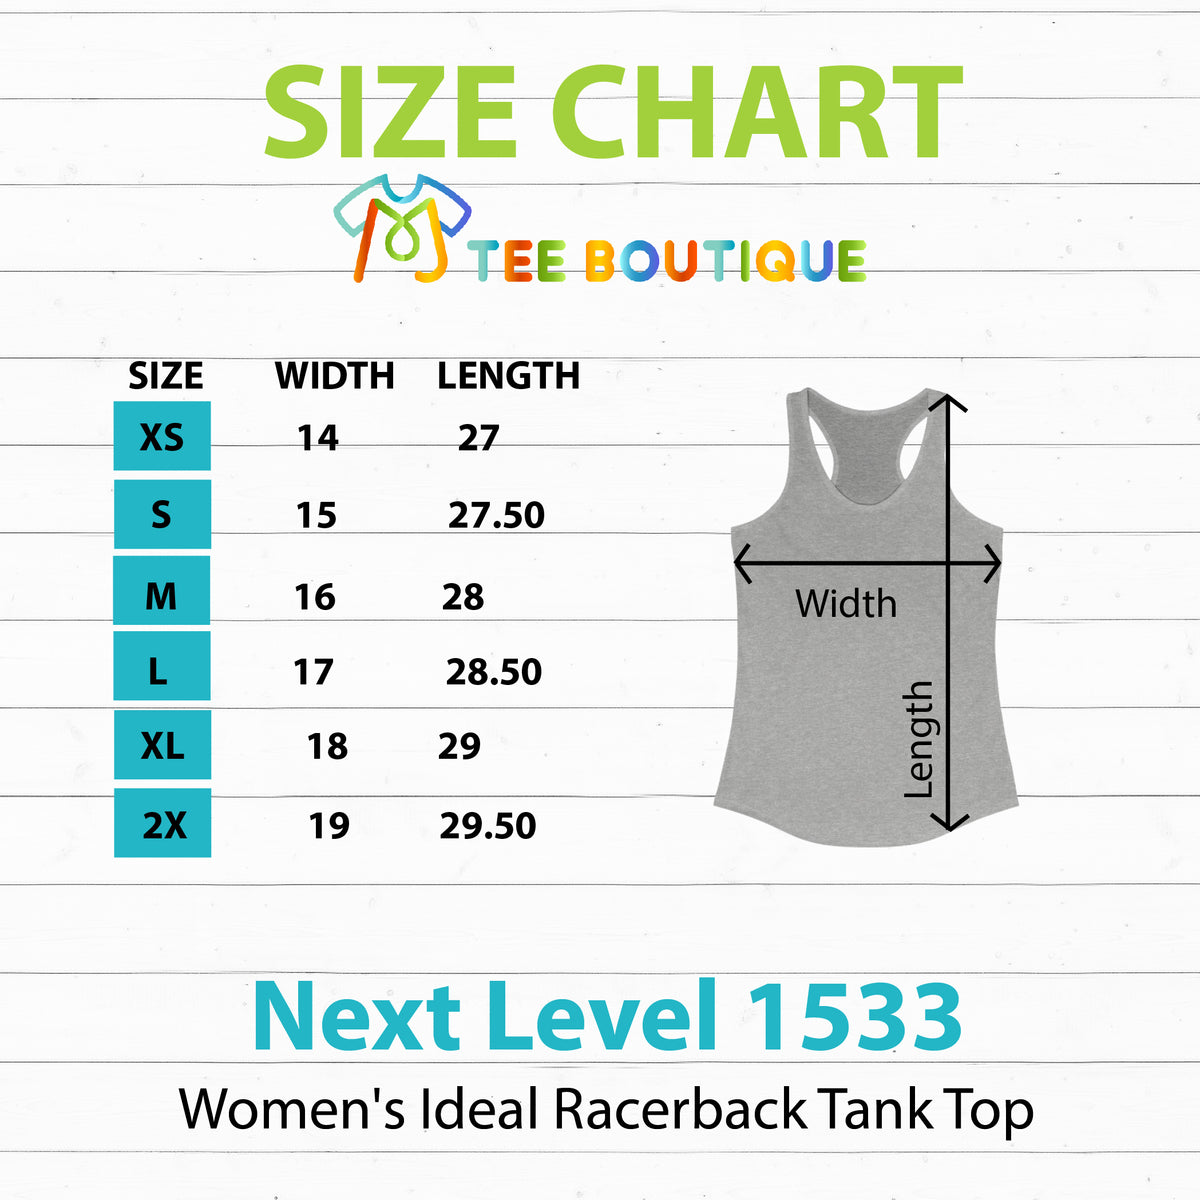 Peace Love Chai Tea Leopard Print Tea Shirt | Tea Lover Gift Indian Shirt | Women's Slim-fit Racerback Tank Top